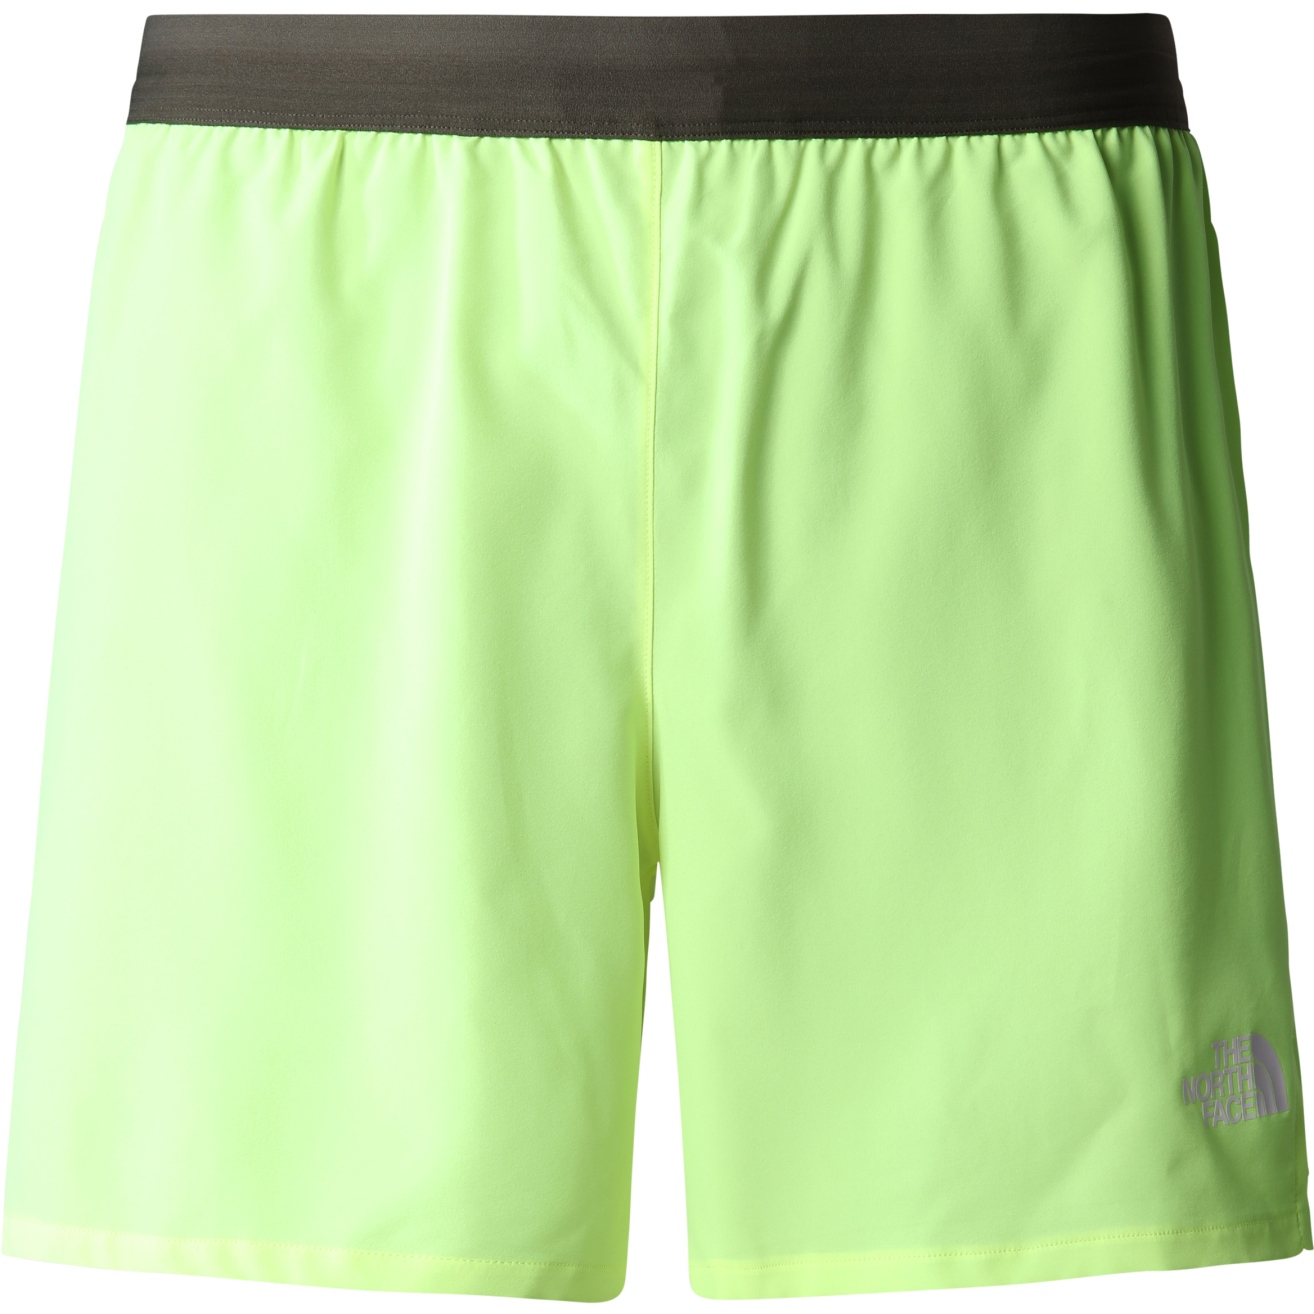 Produktbild von The North Face Herren Sunriser 2-in-1 Shorts 8315 - LED Yellow/New Taupe Green